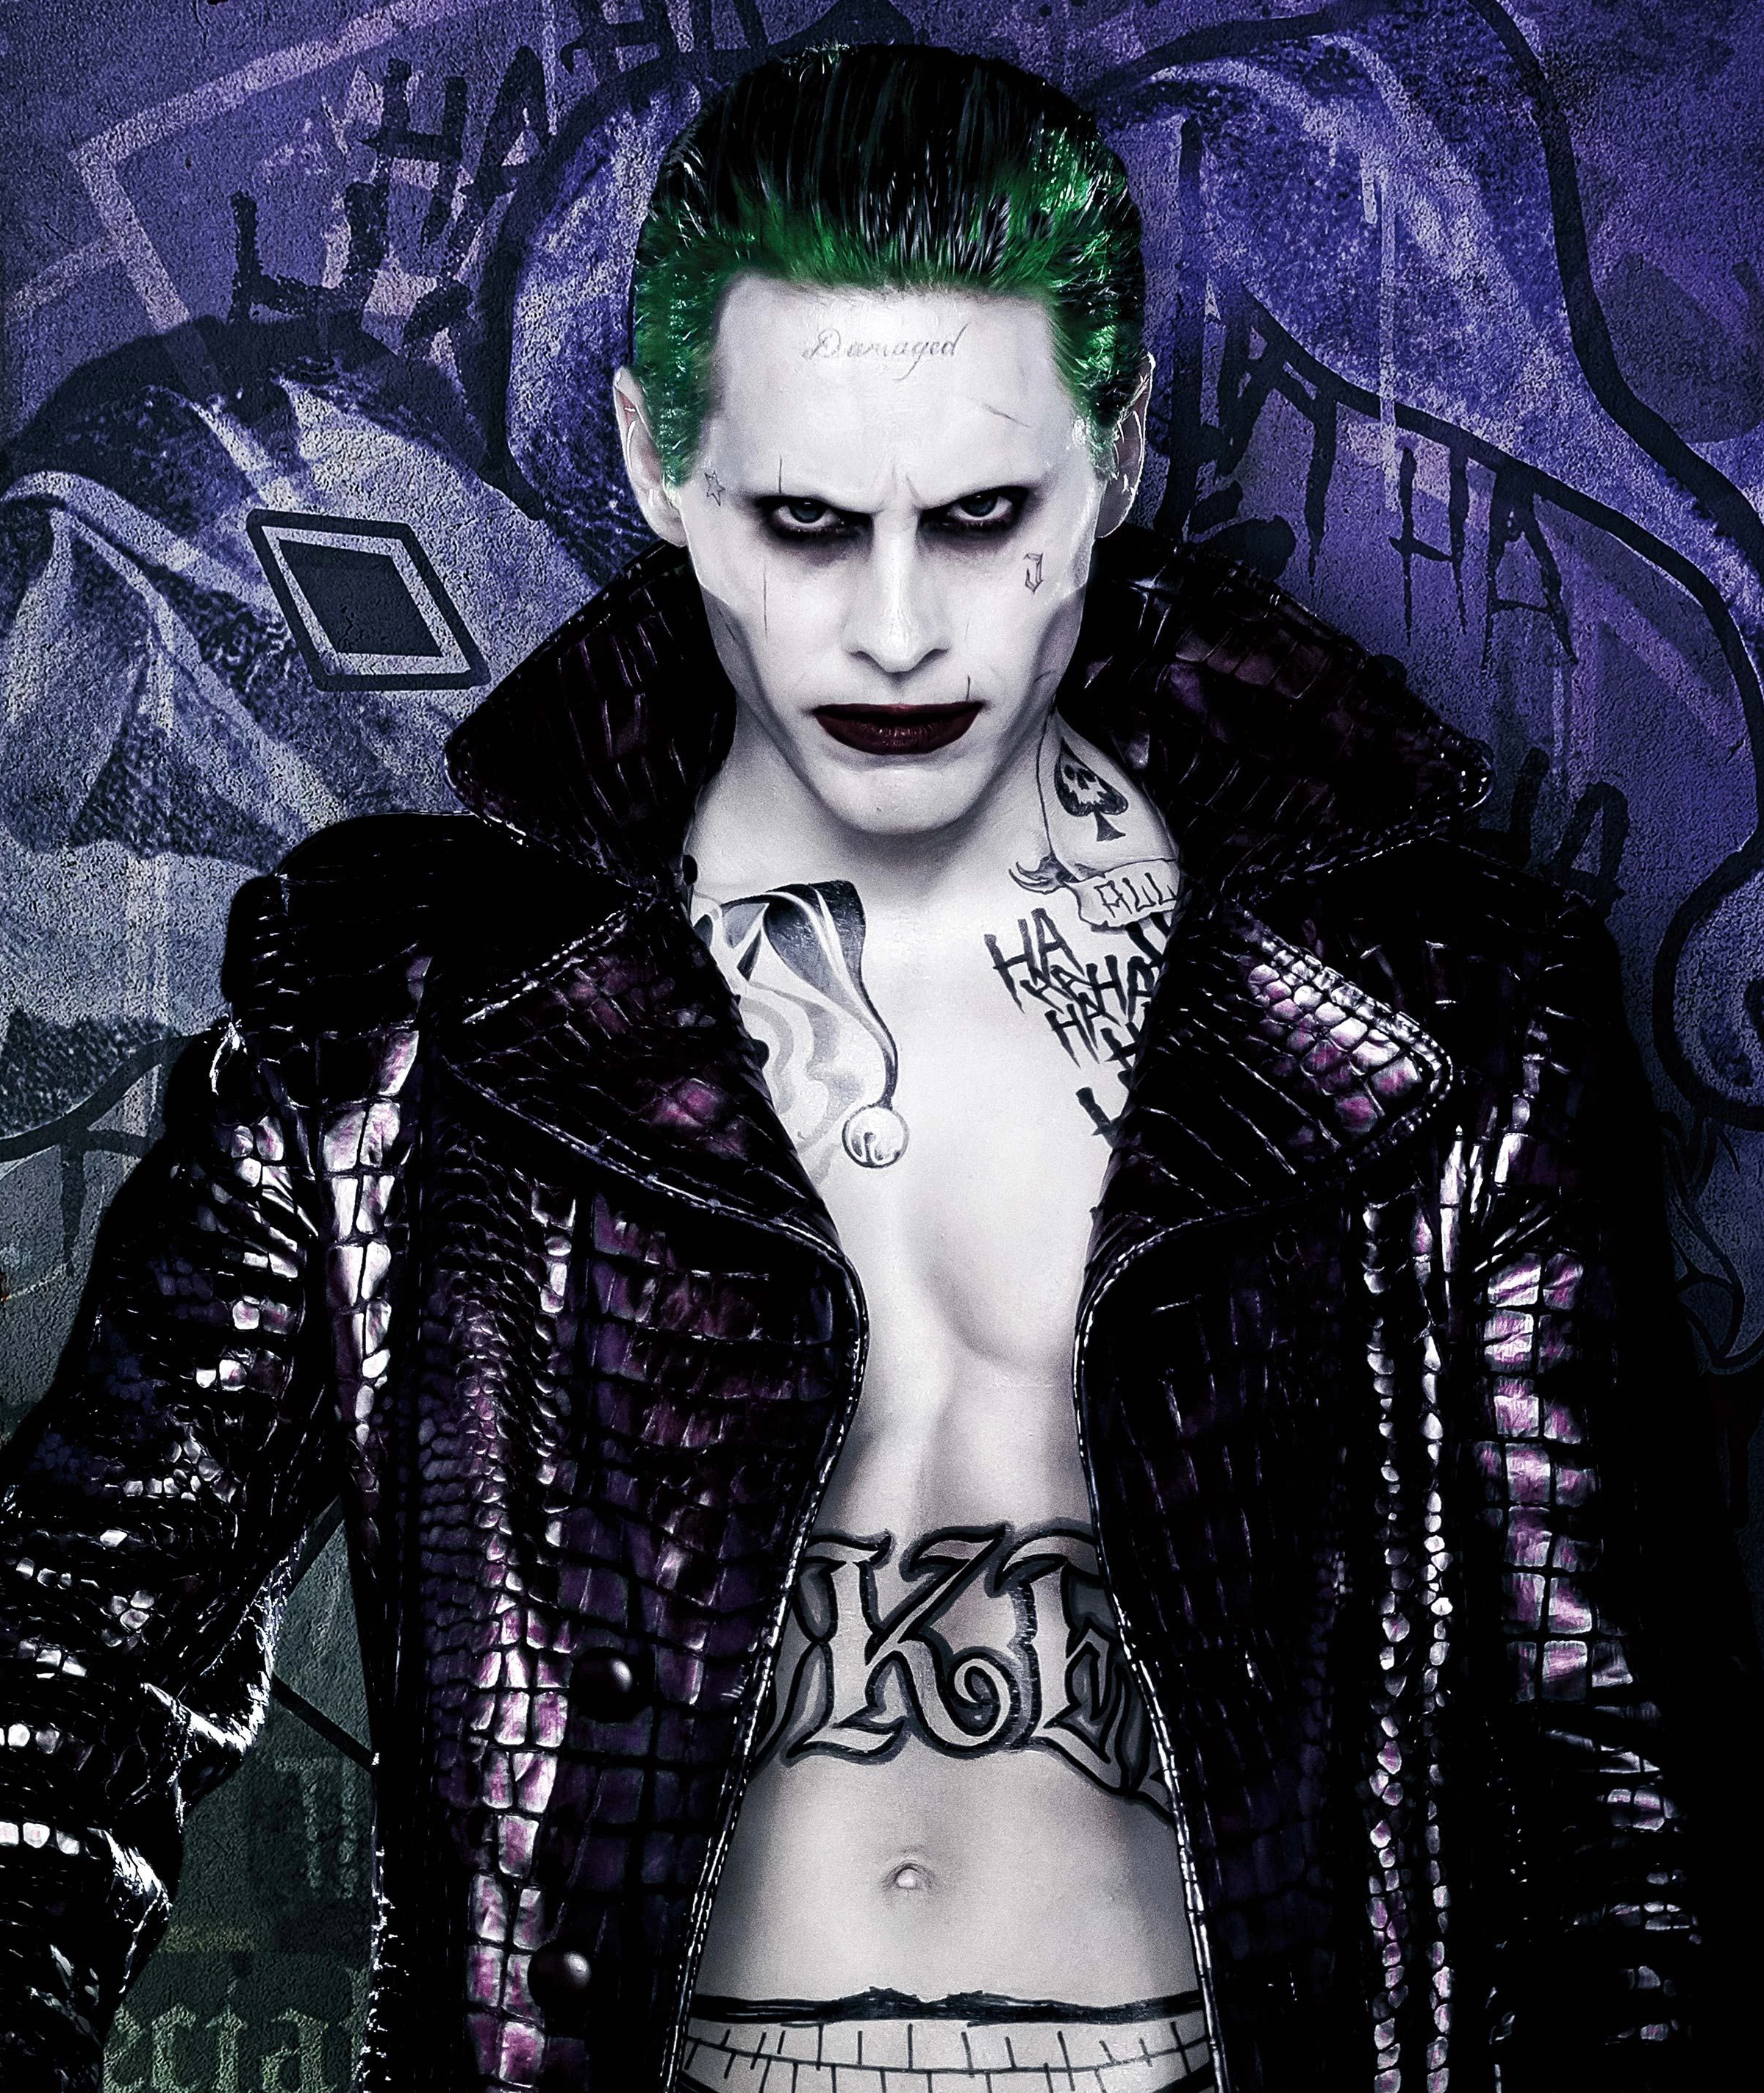 Joker, DC Extended Universe Wiki